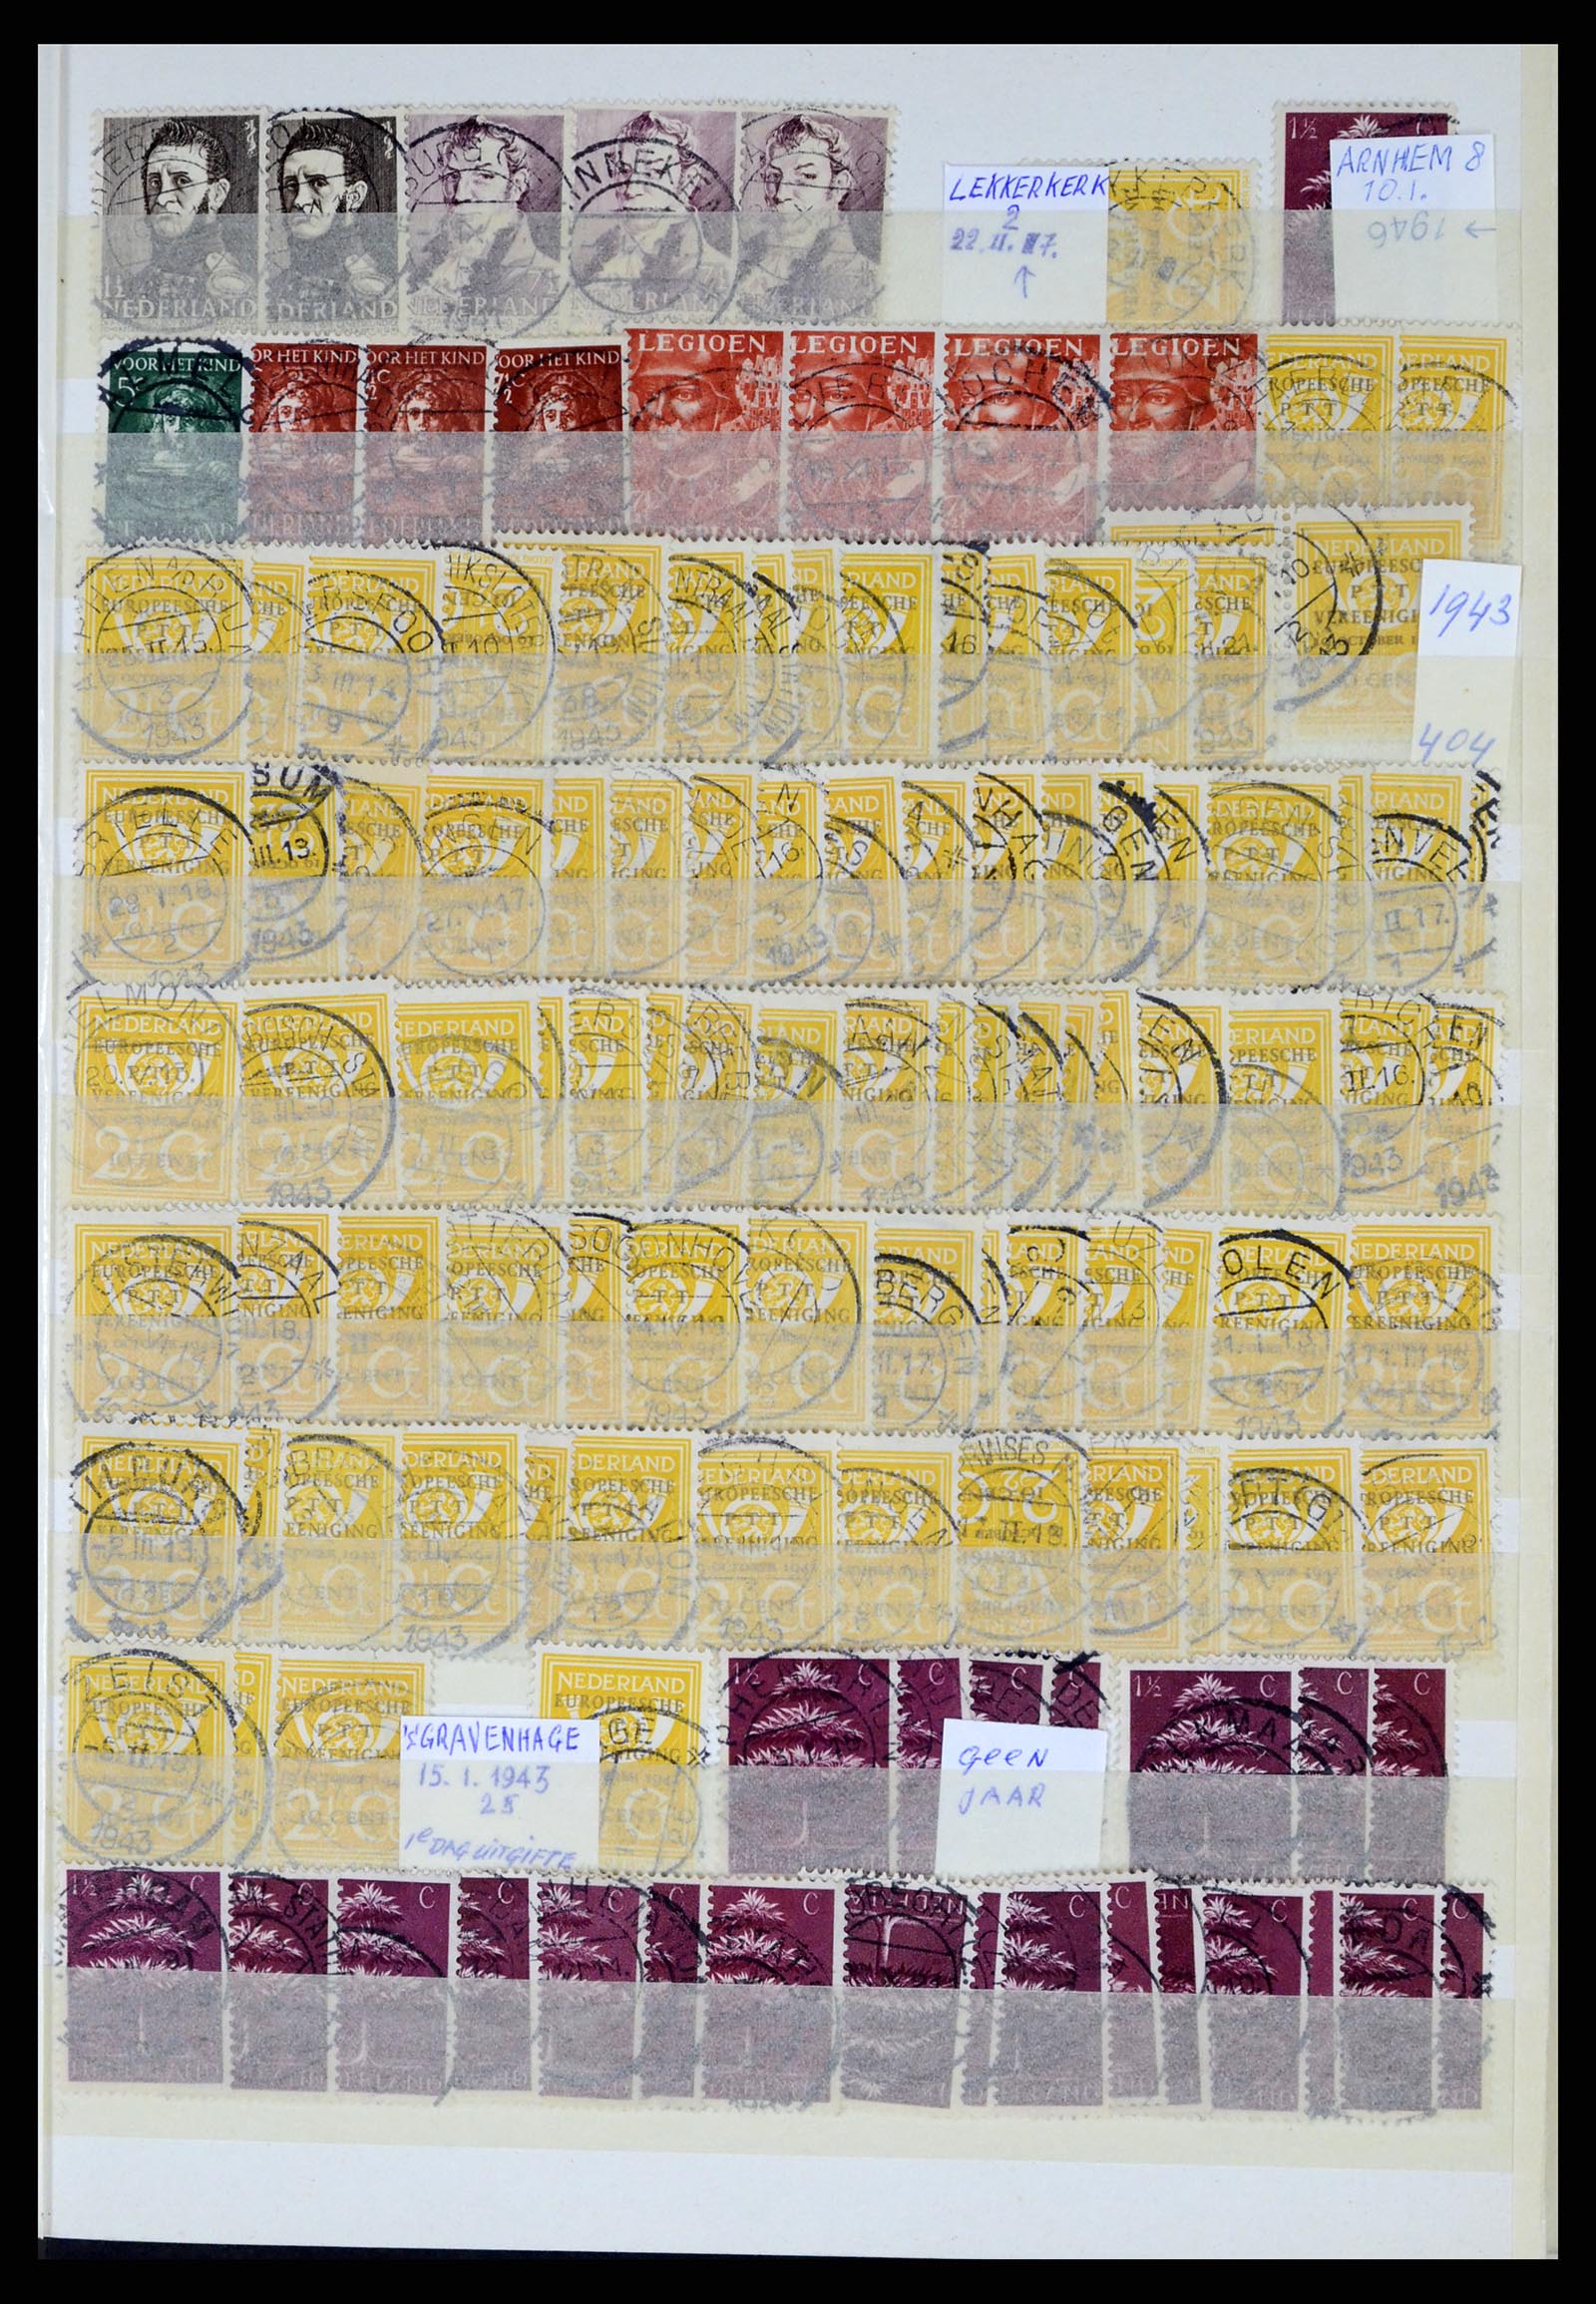 37424 033 - Stamp collection 37424 Netherlands shortbar cancels.